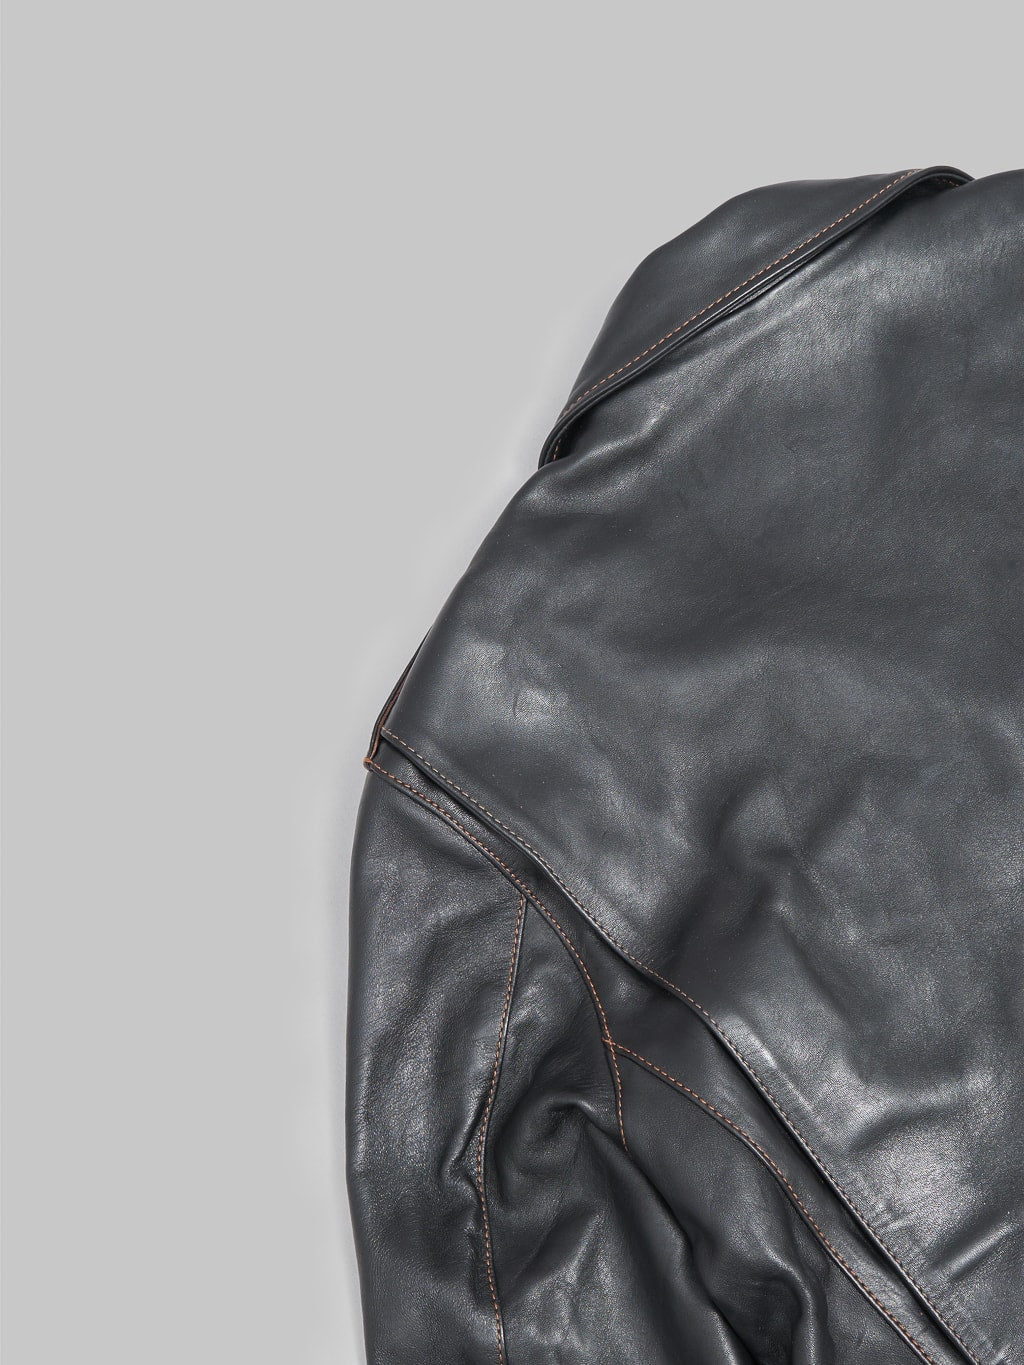 The Flat Head Horsehide Double Riders Jacket Black texture